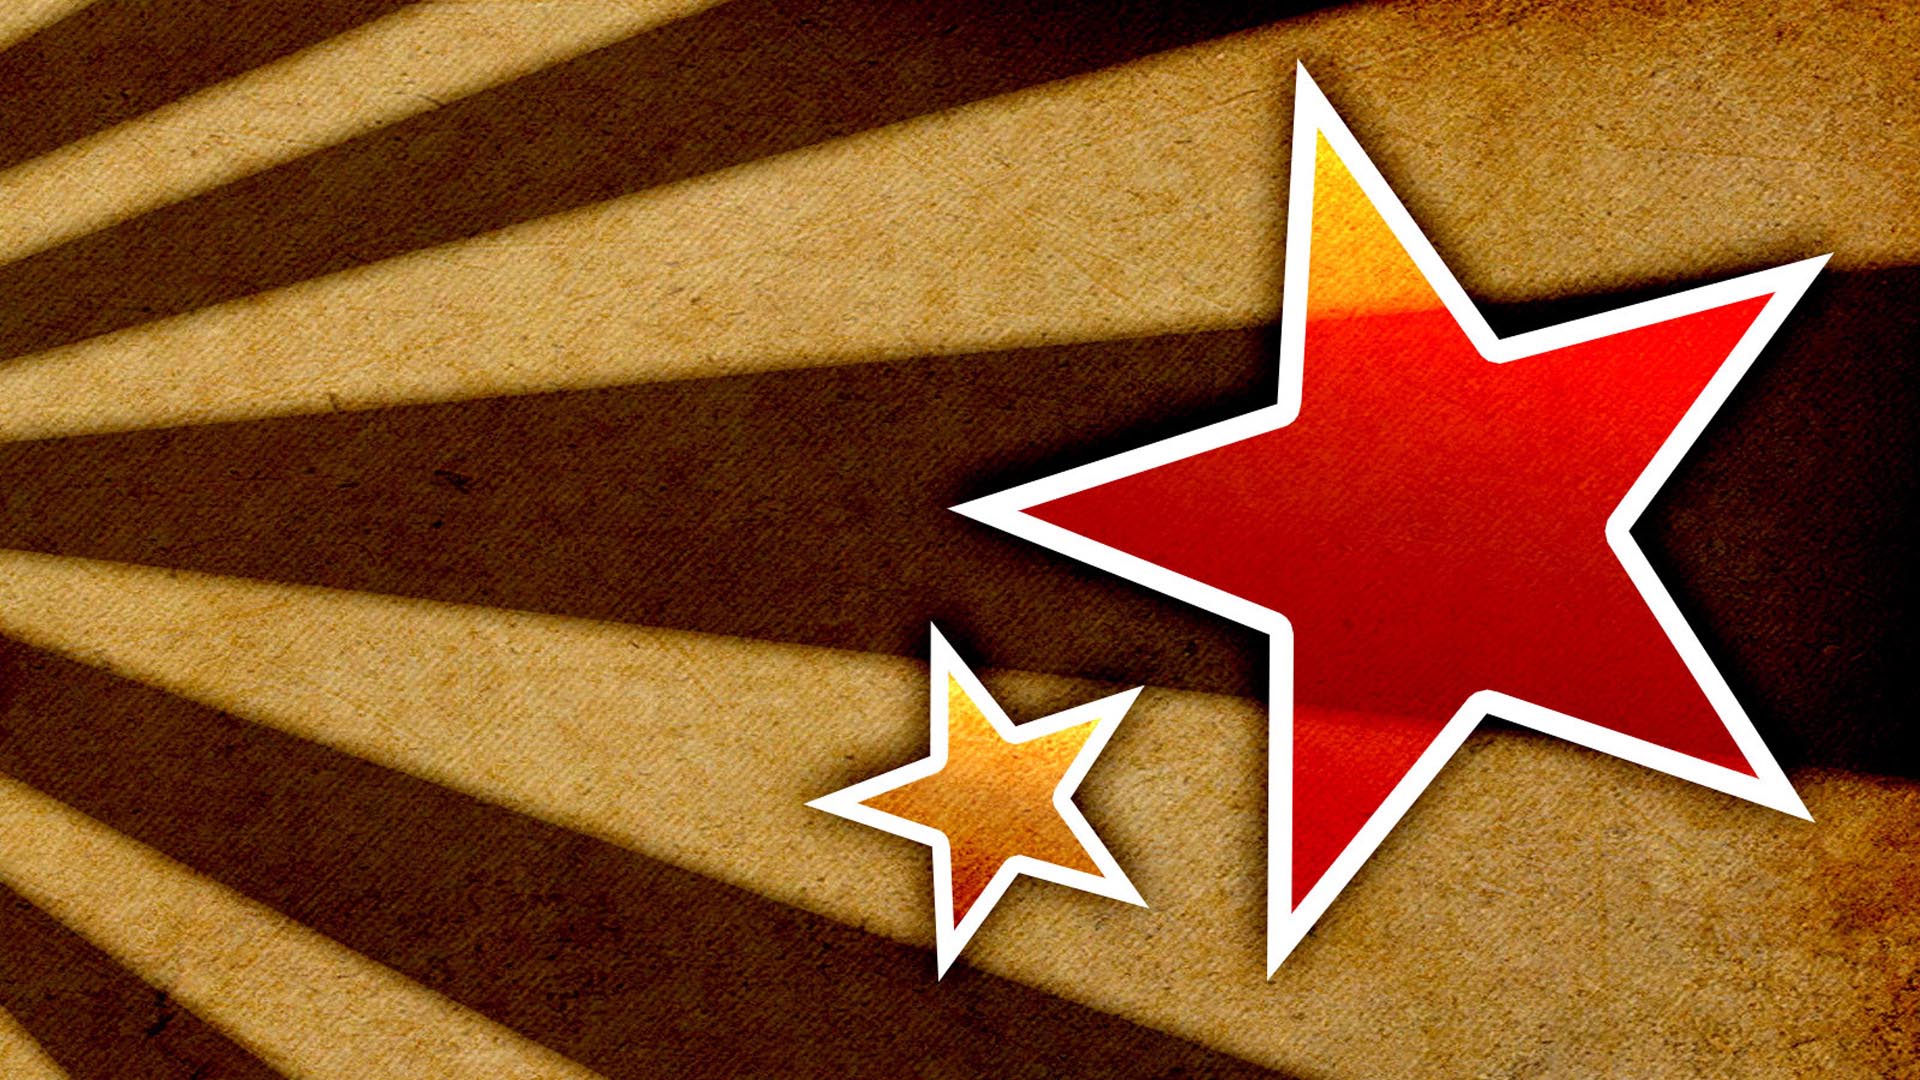 Stars of Grunge HD Wallpaper FullHDWpp HD